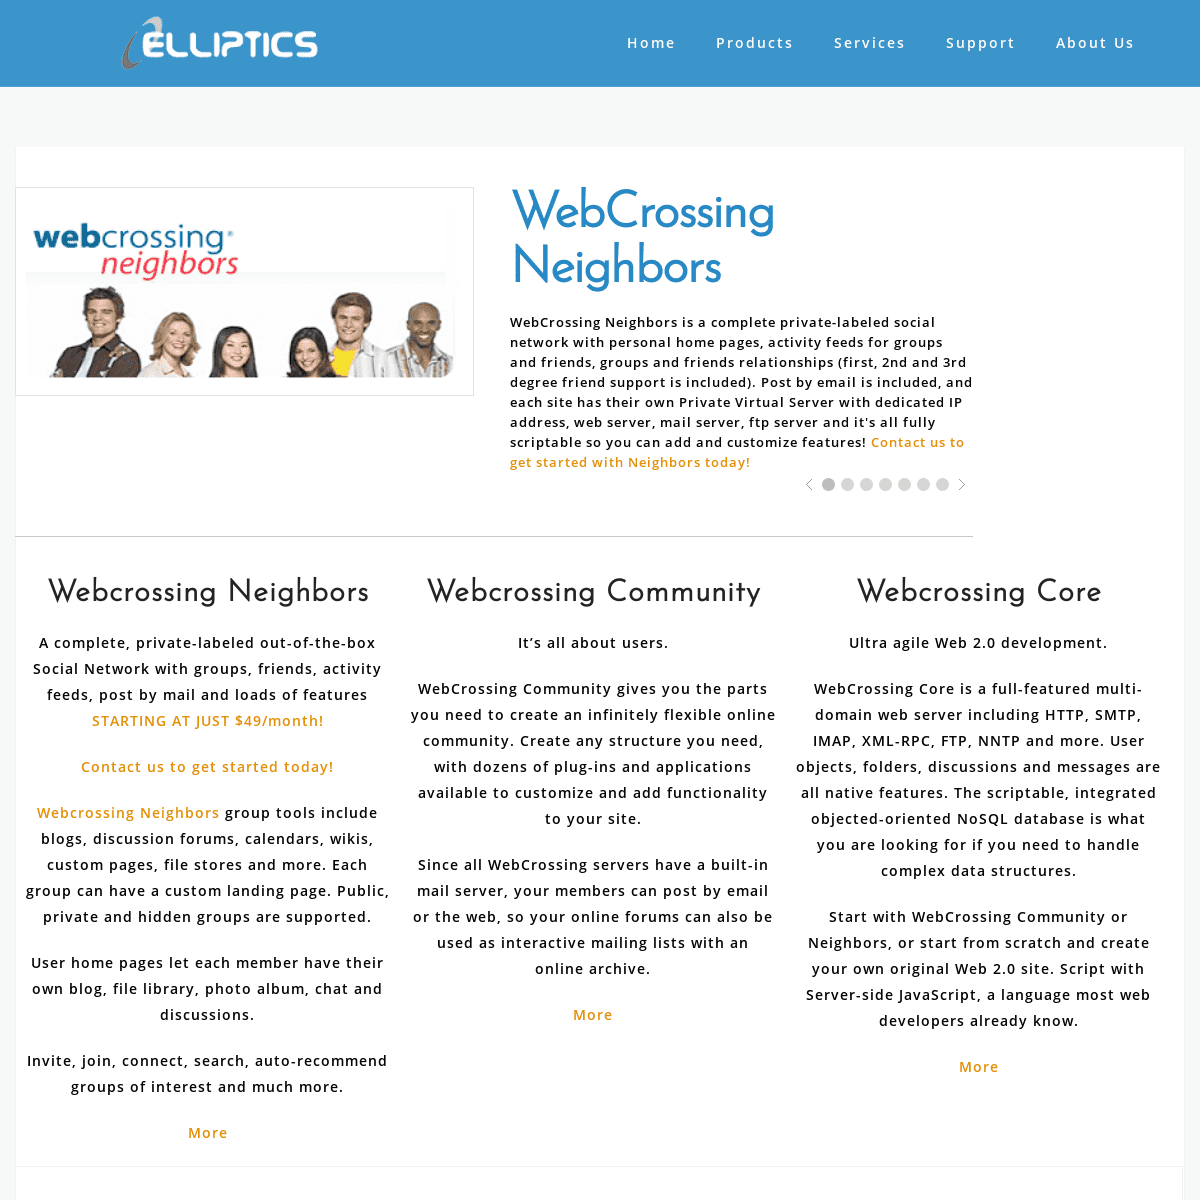 A complete backup of https://elliptics.com